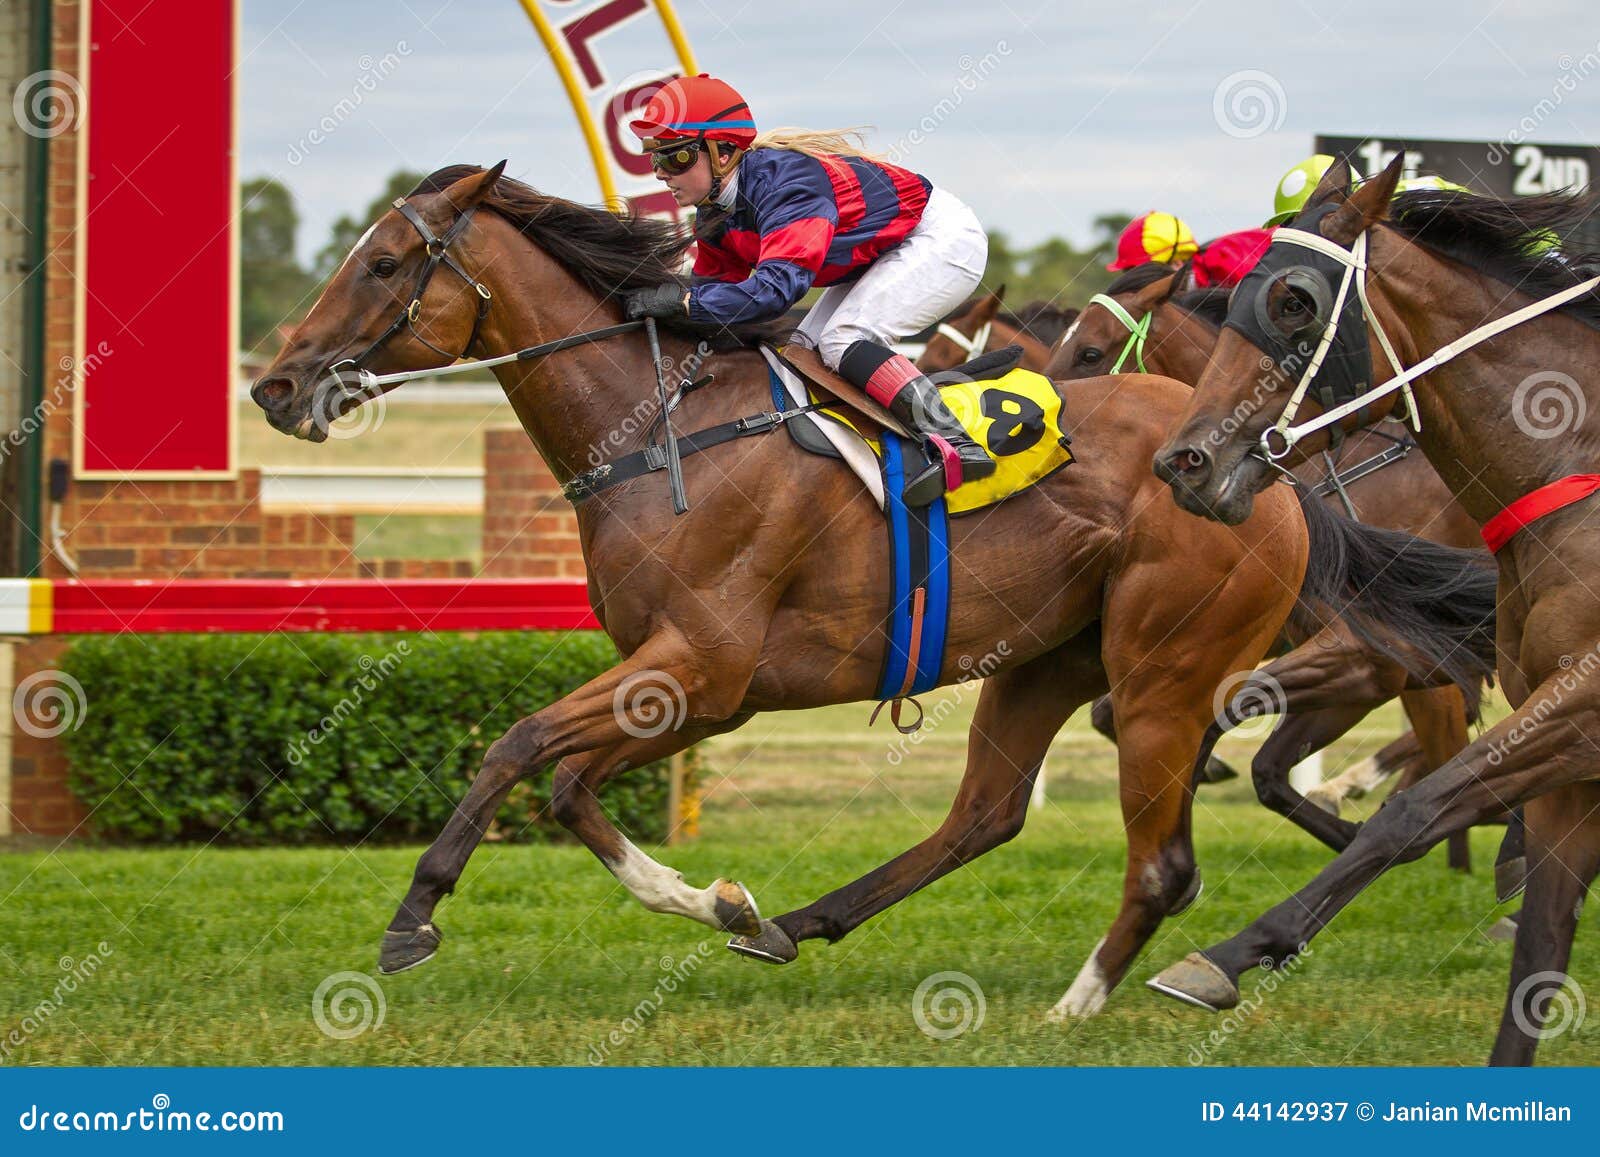 winning racehorse and female jockey at dubbo nsw australia